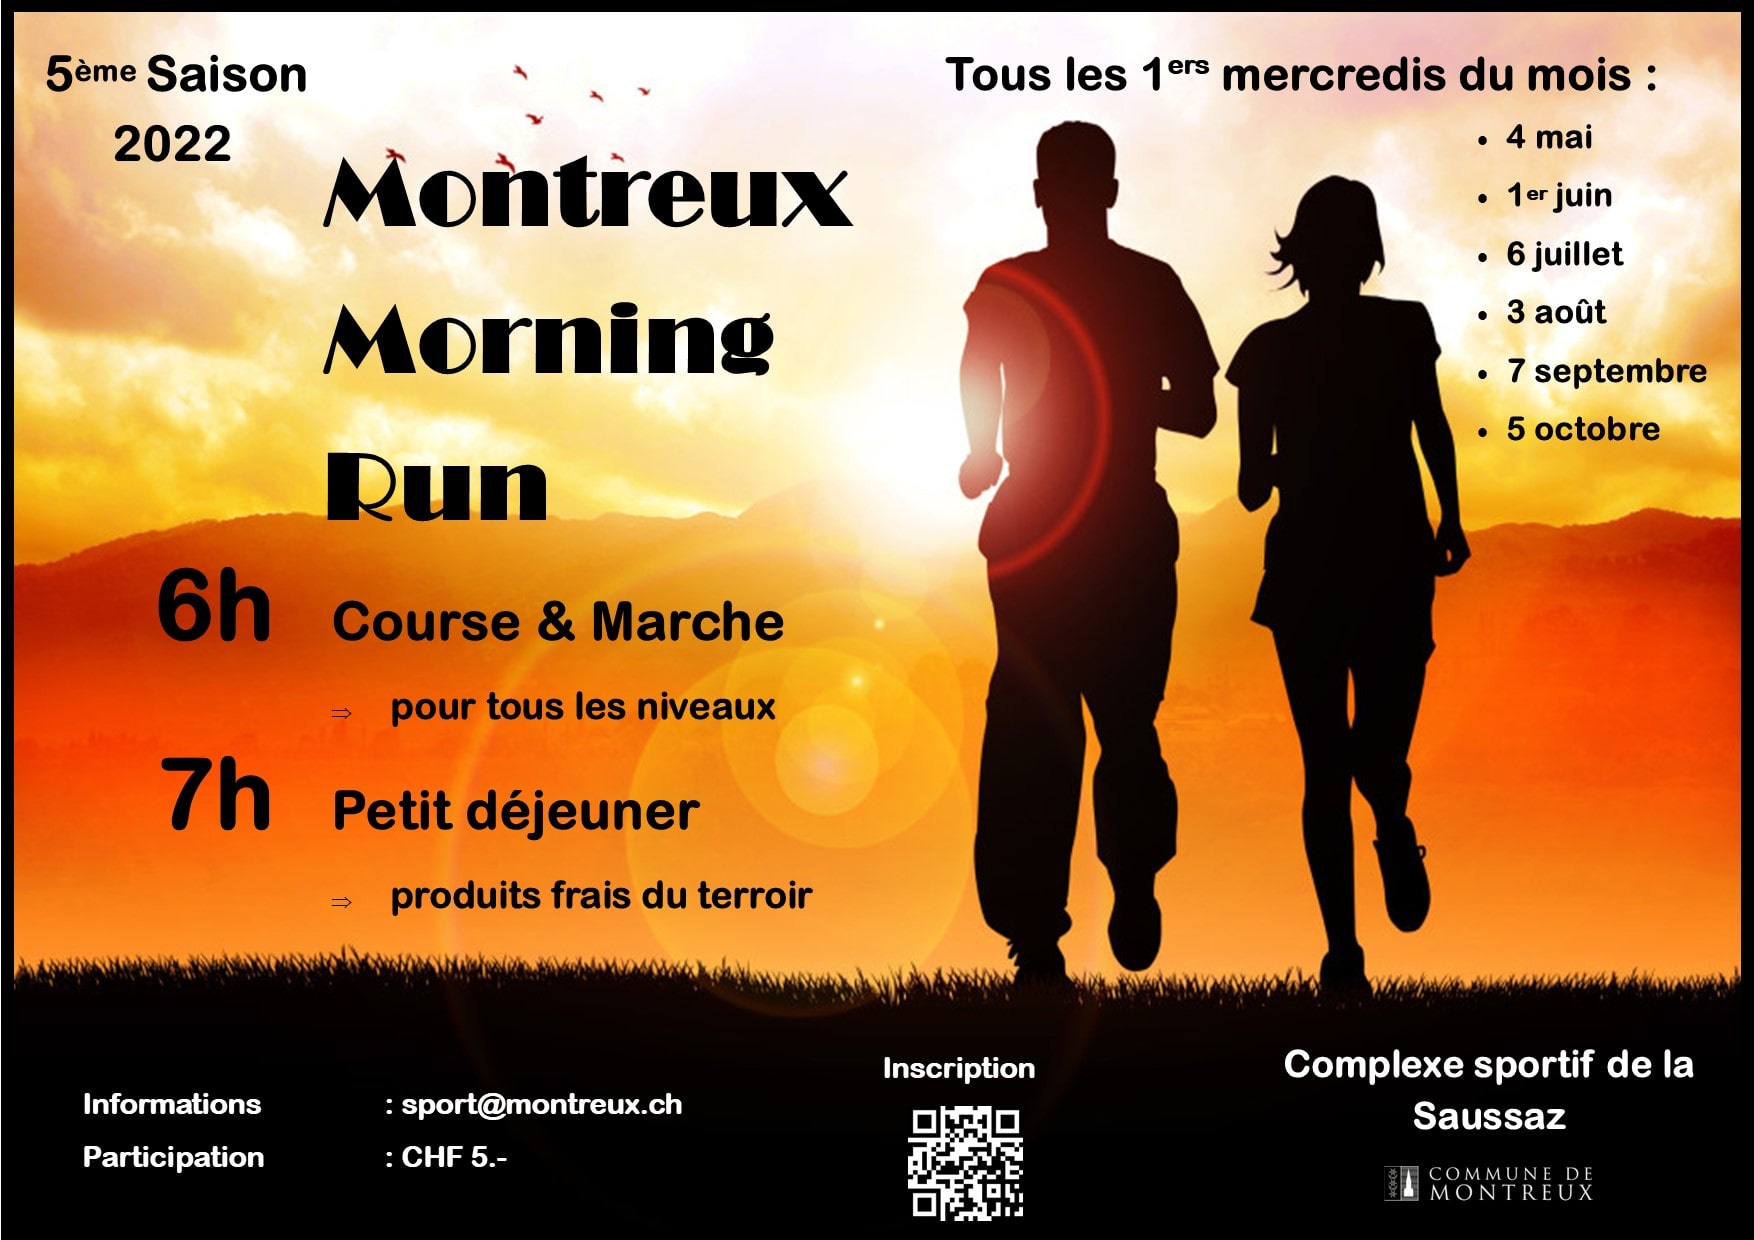 Montreux Morning Run